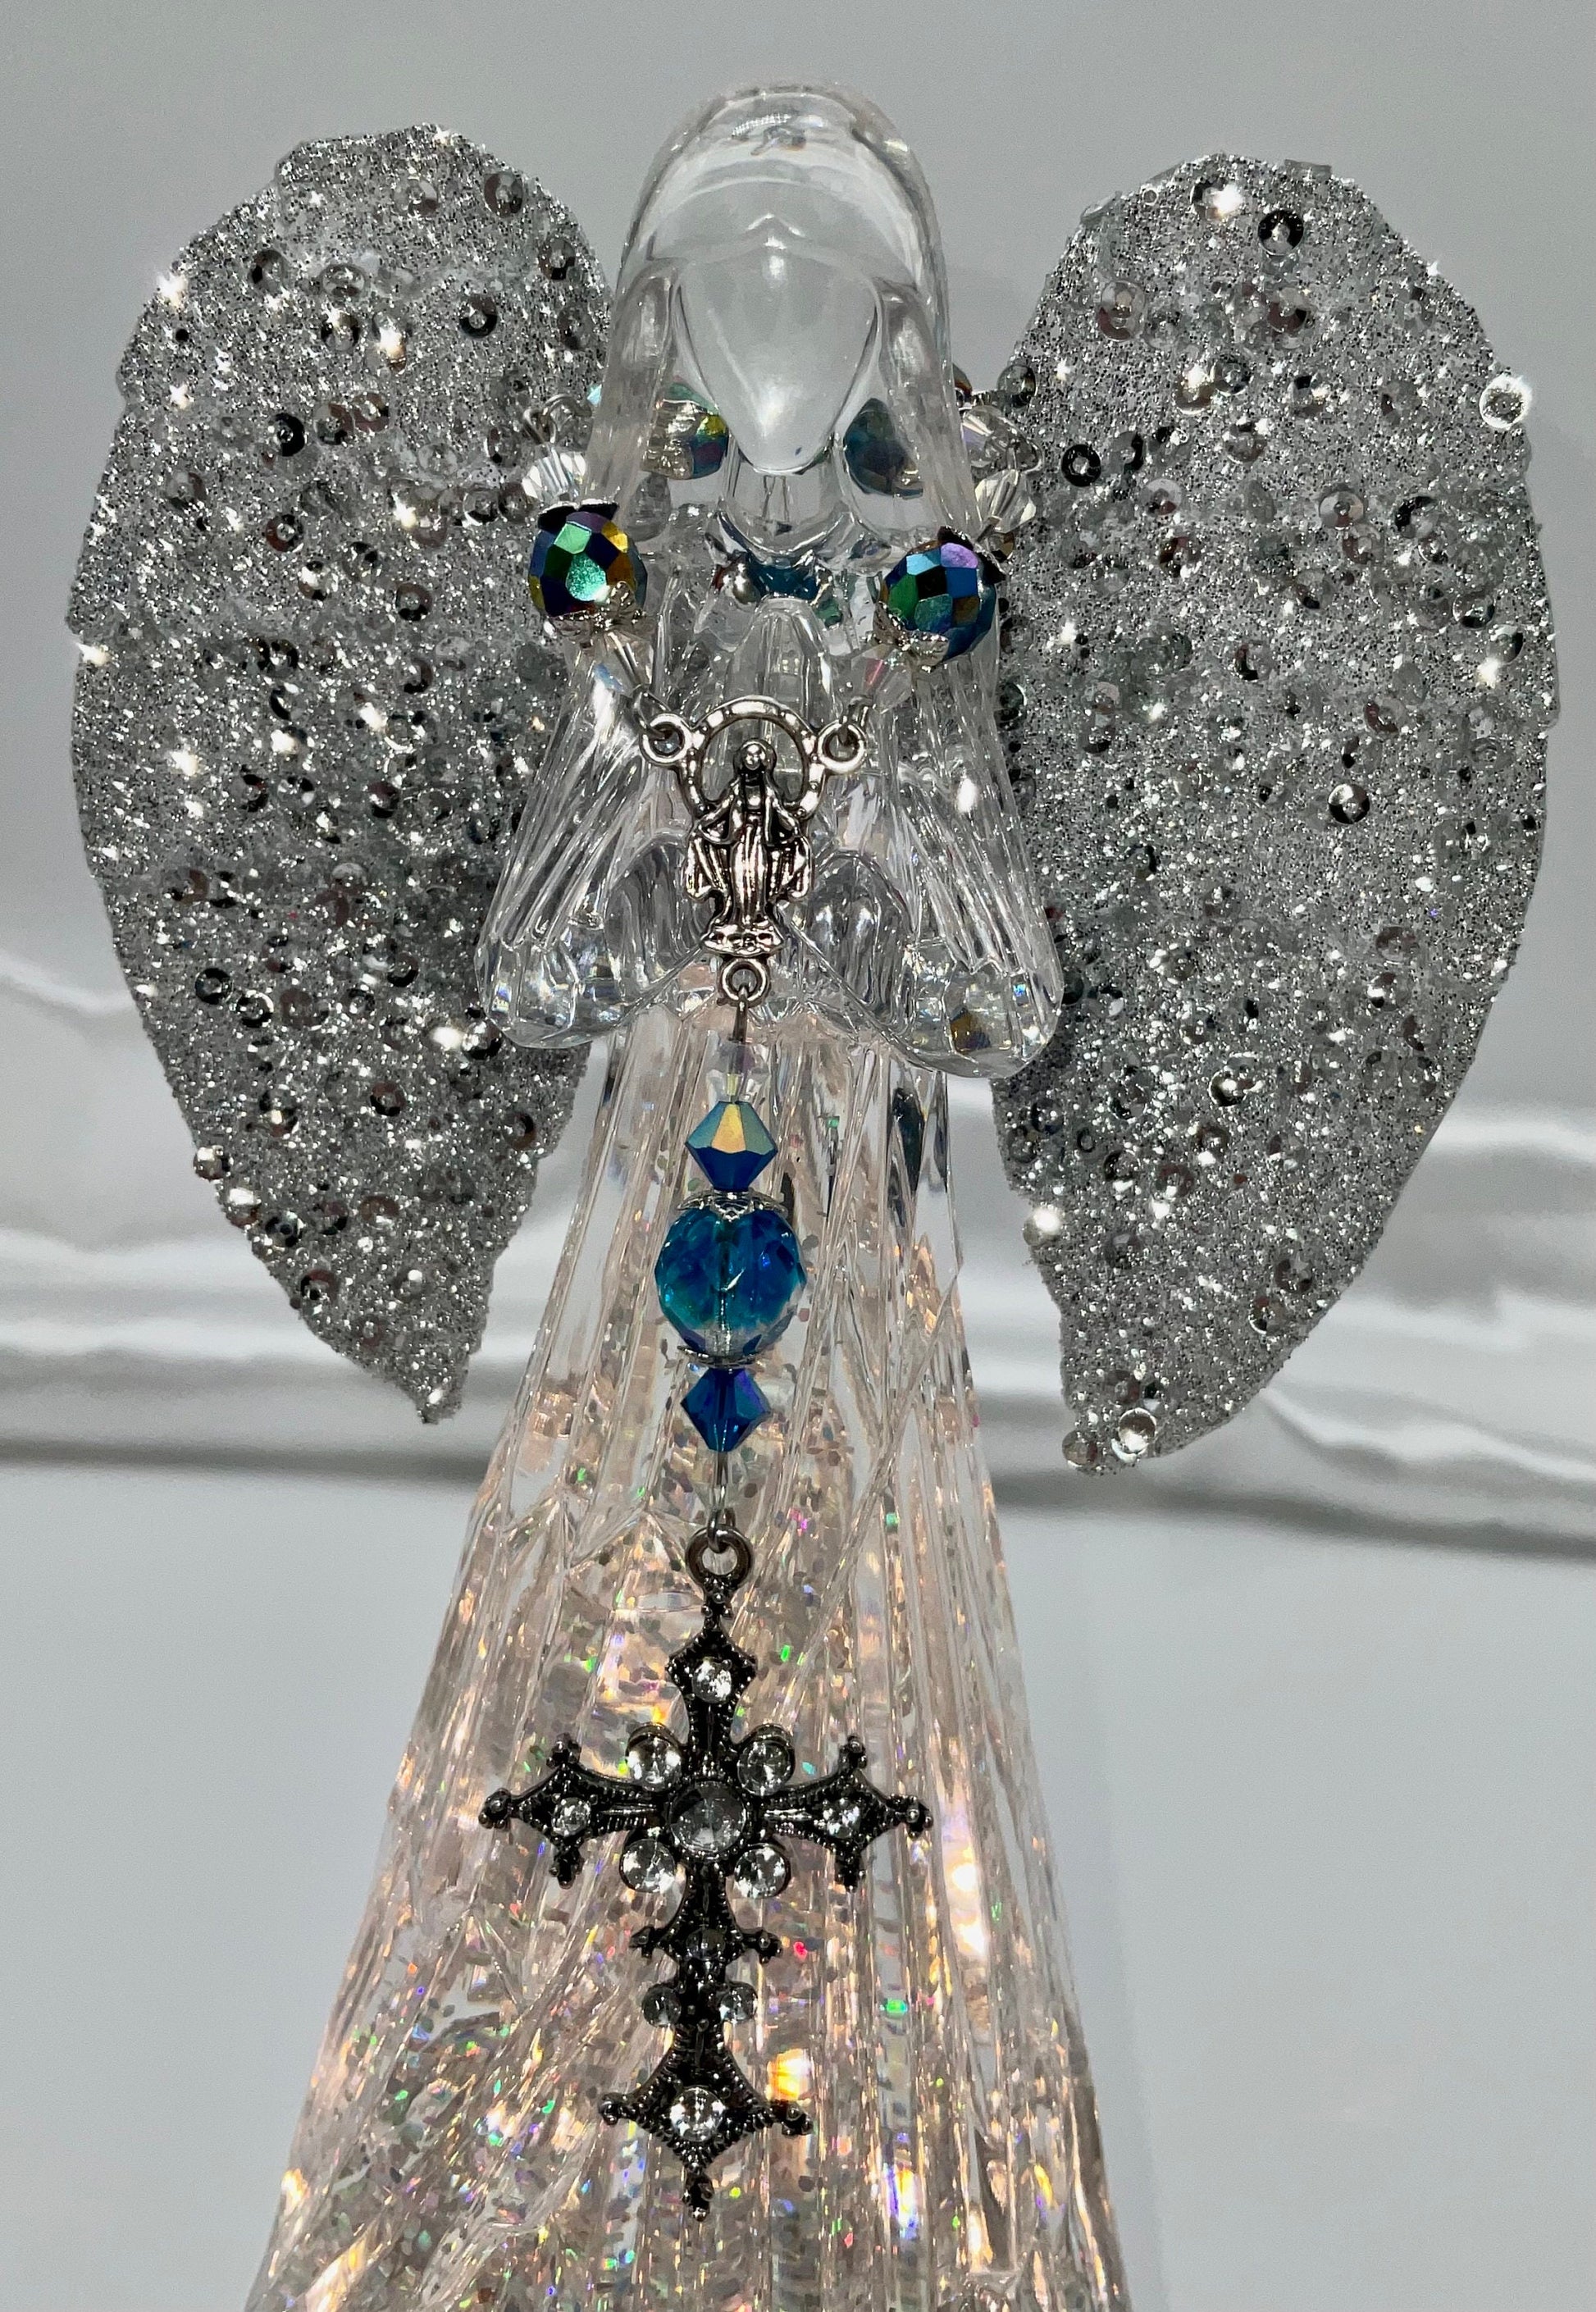 Blue Crystal Beaded Pocket Rosary Catholic Christian Religious Jewelry Hand Made with Rhinestone Accent Cross - 1 Decade